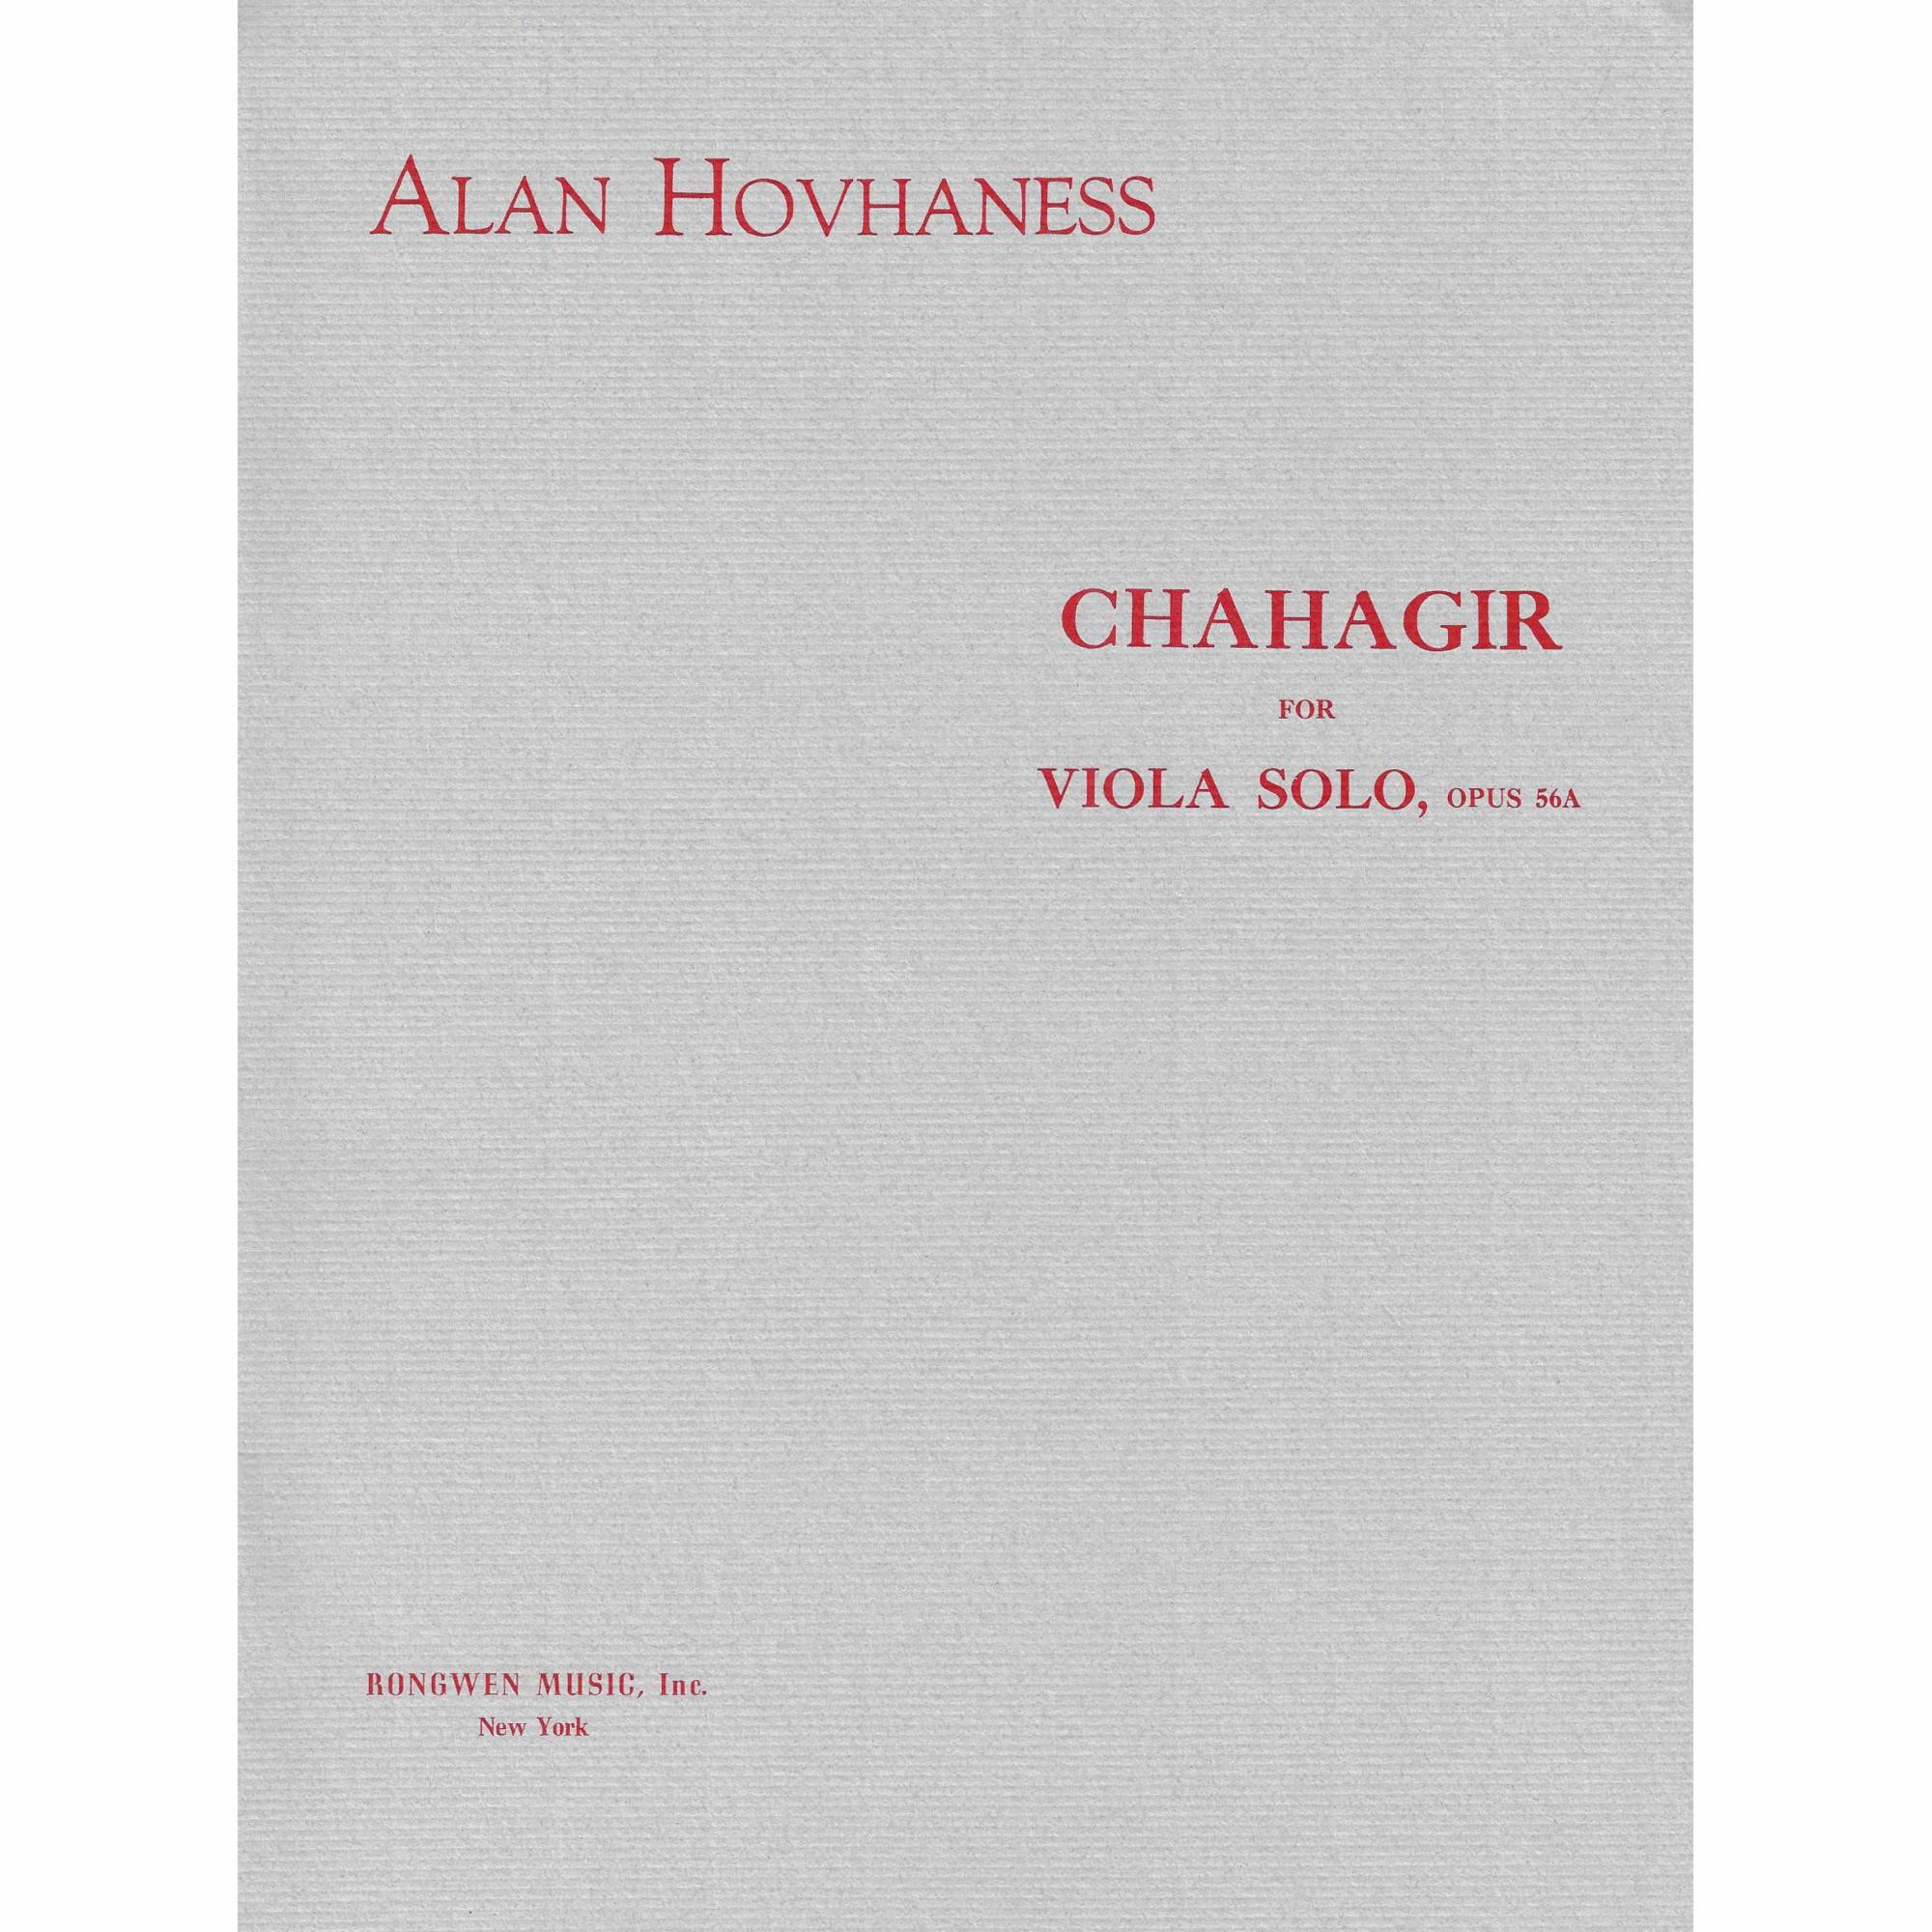 Hovhaness -- Chahagir, Op. 56a for Solo Viola